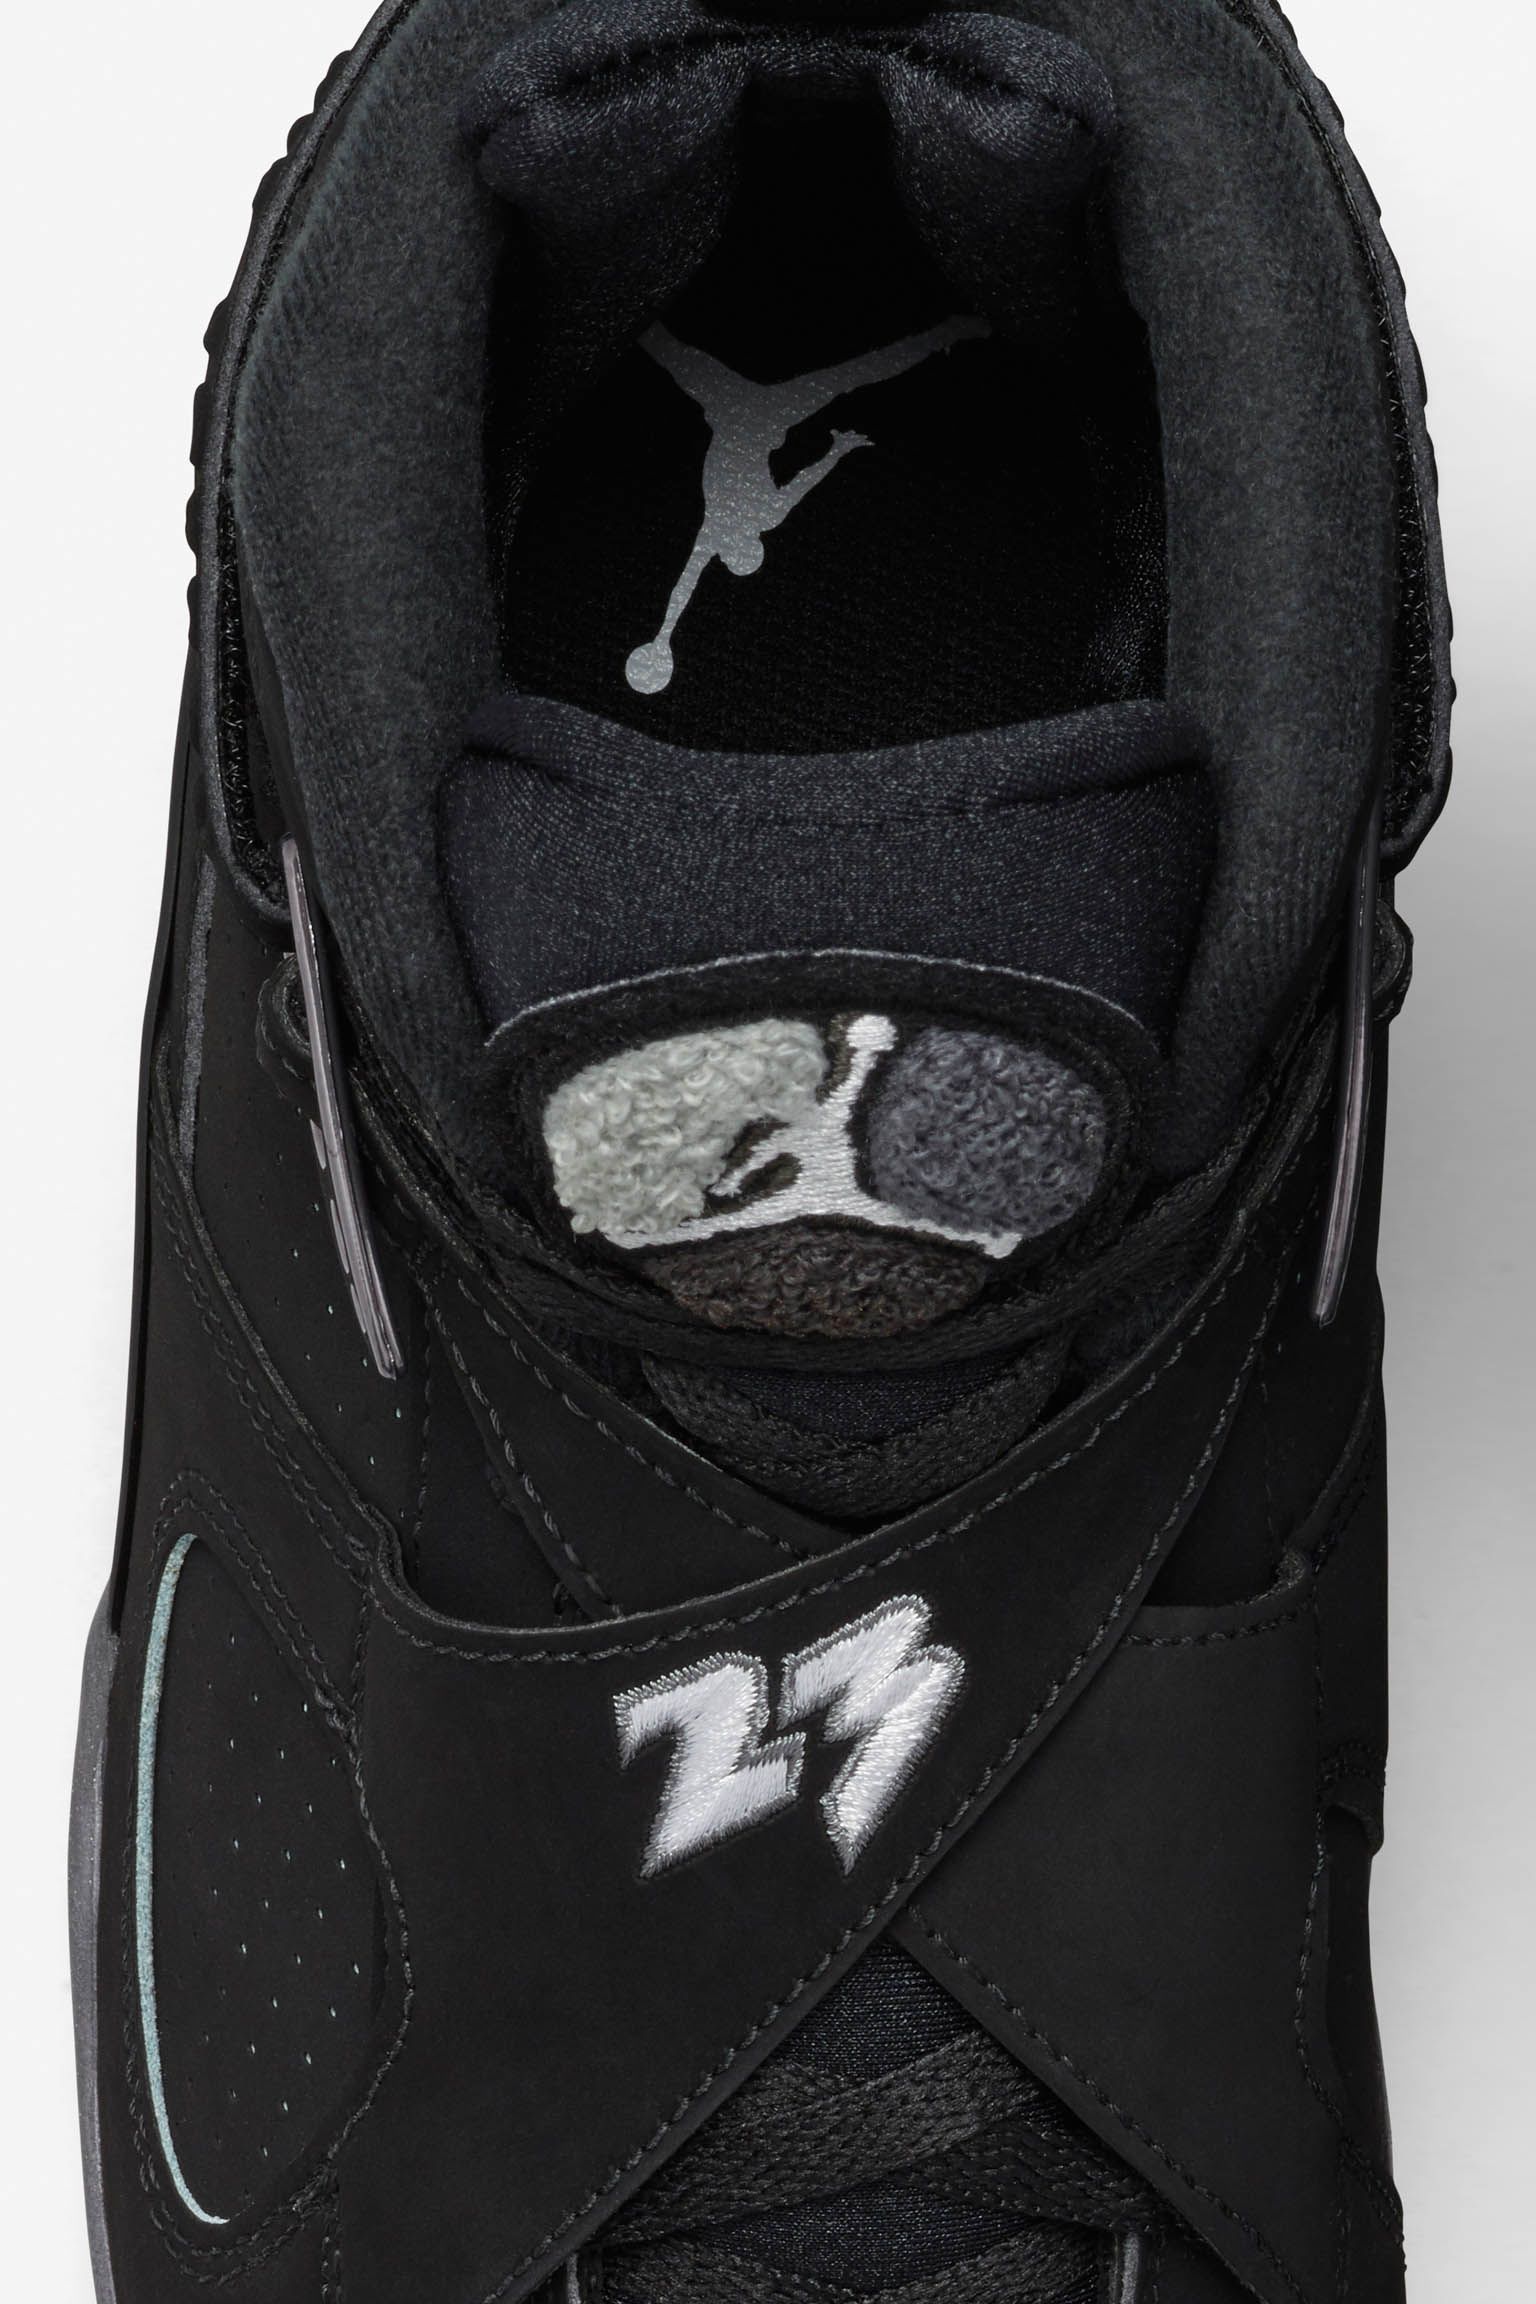 Air Jordan 8 Retro 'Chrome' Release Date. Nike SNKRS